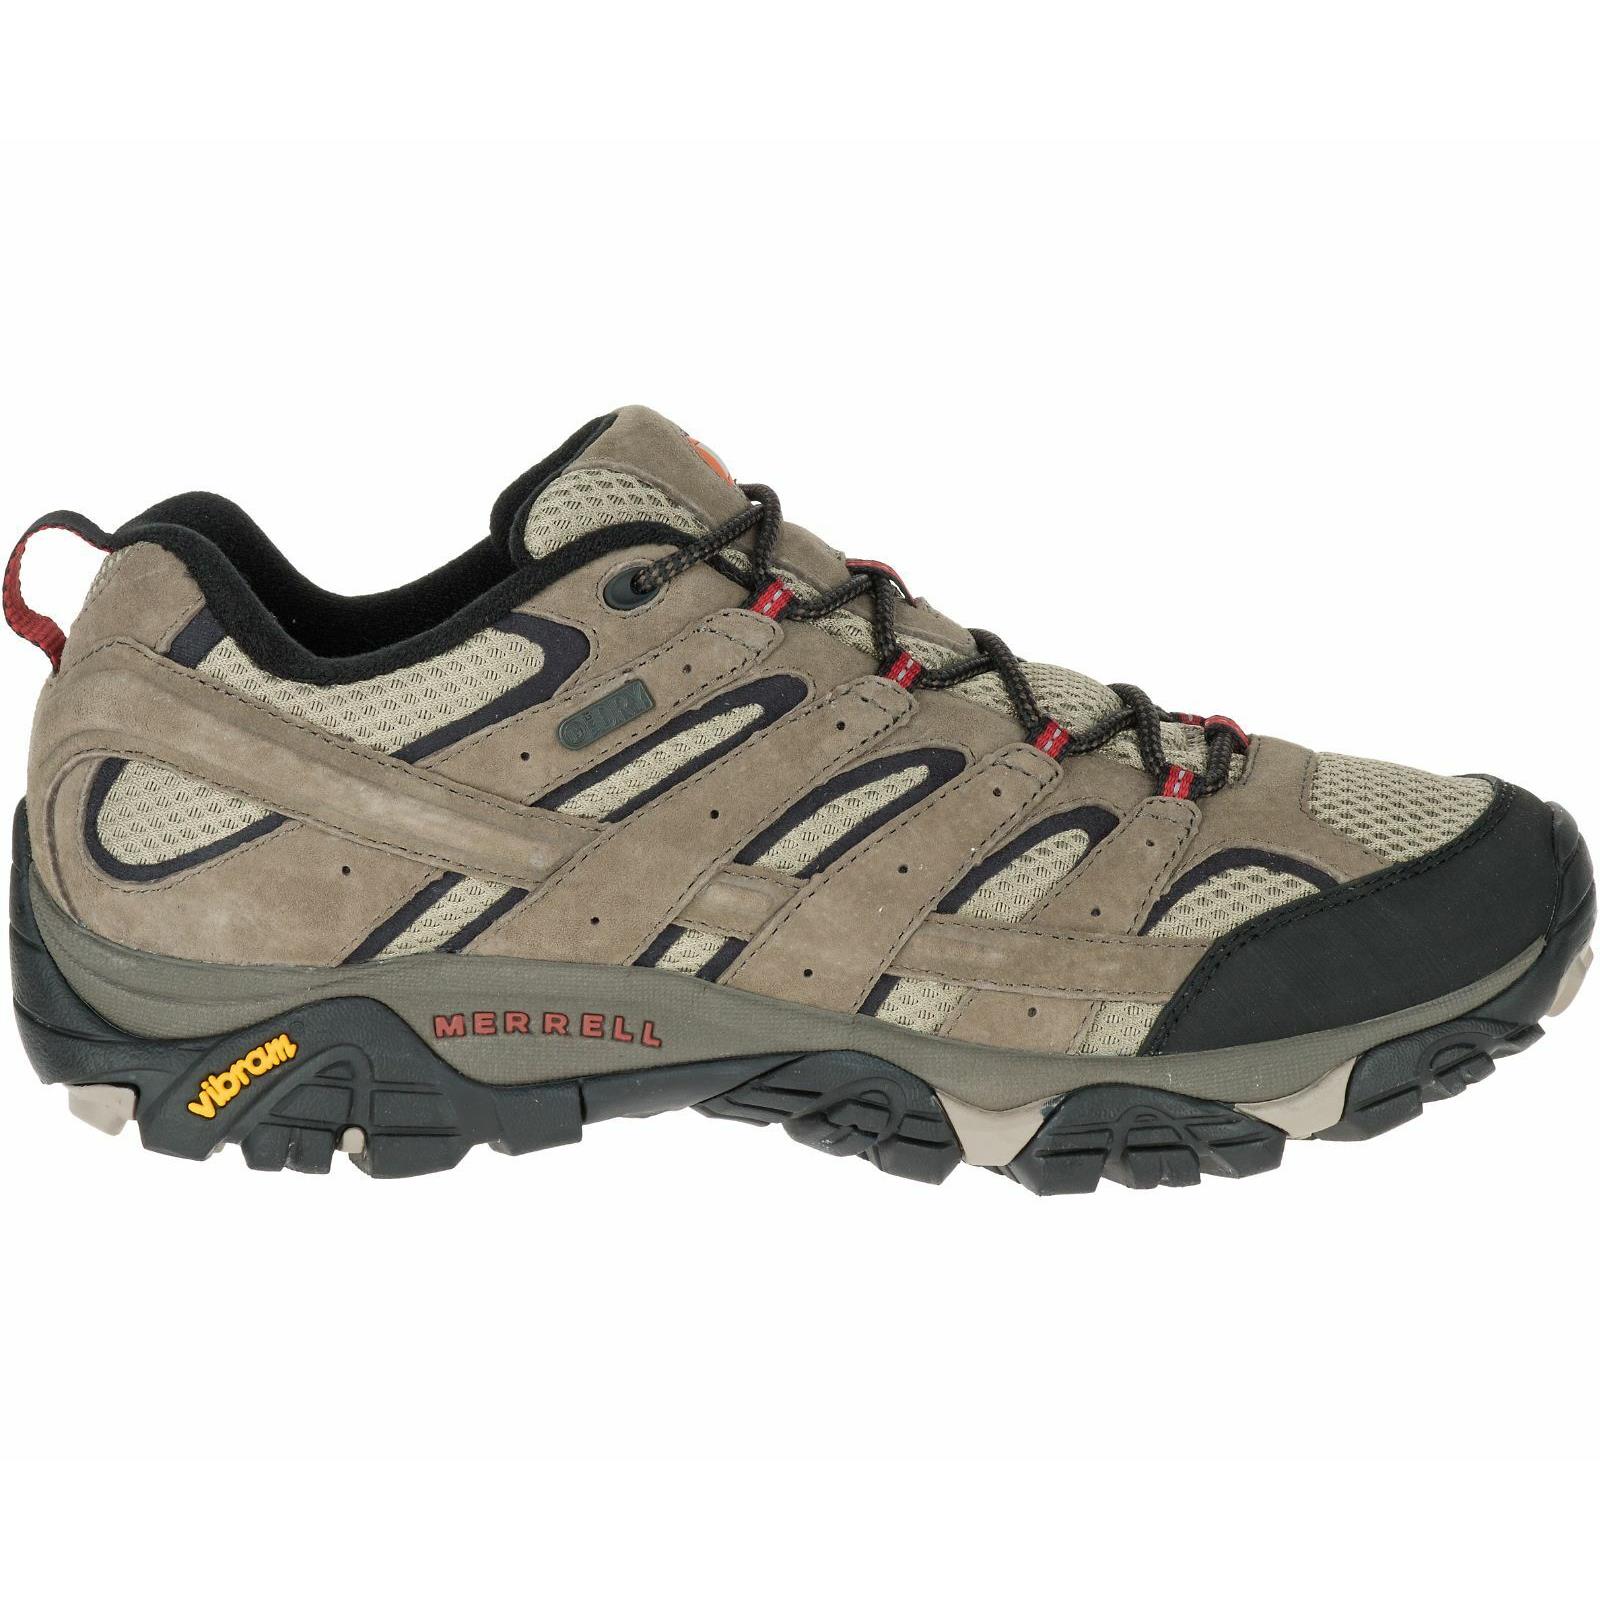 Merrell Men`s Waterproof Shock Absorbing Moisture Wicking Hiking Leather Shoes Bark Brown